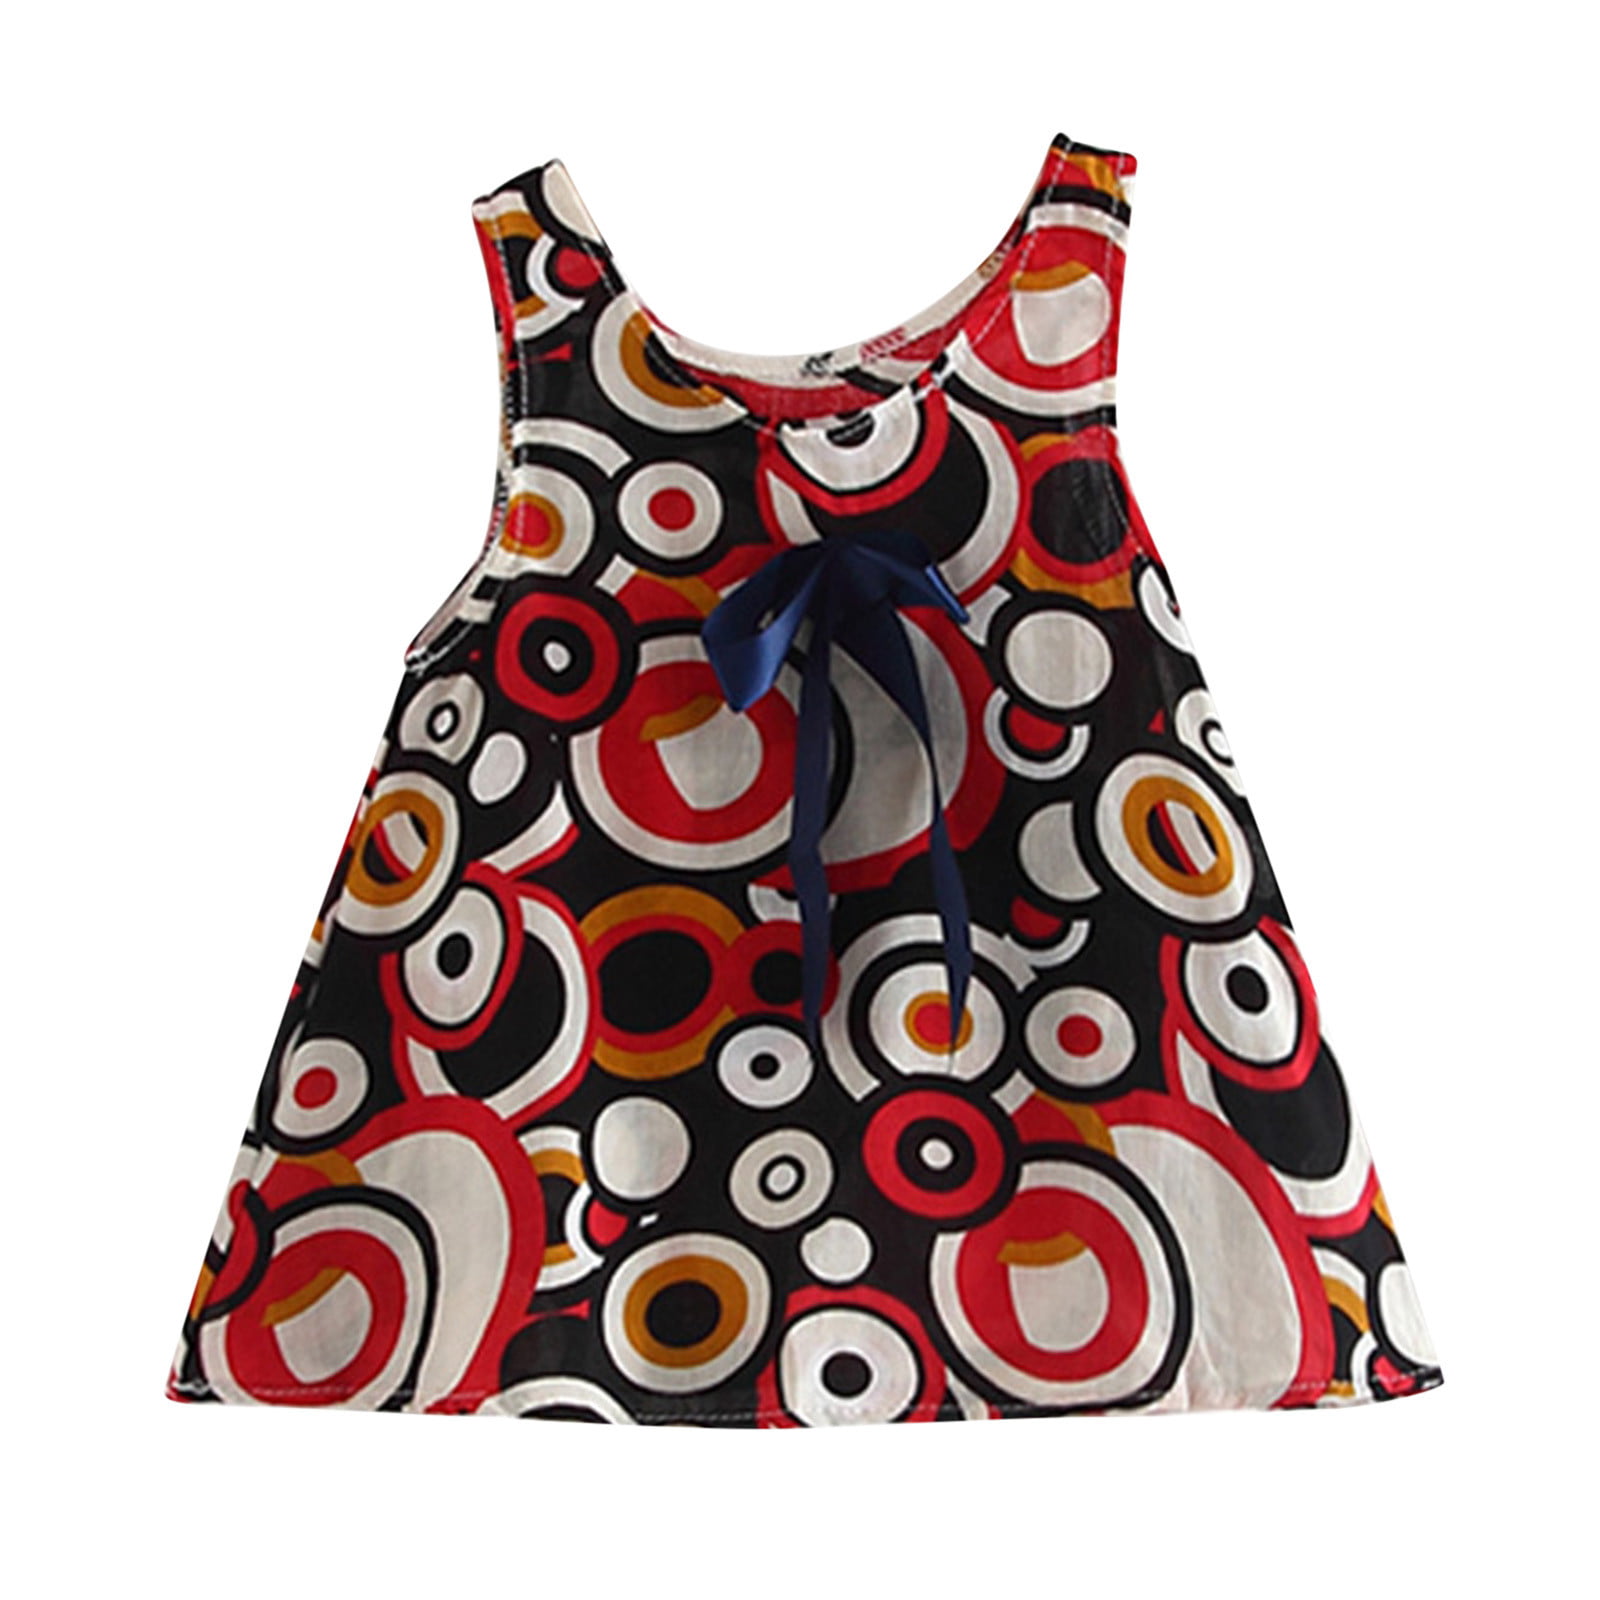 Rovga Dresses For Girls Toddler Kids Baby Girls Clothes Summer